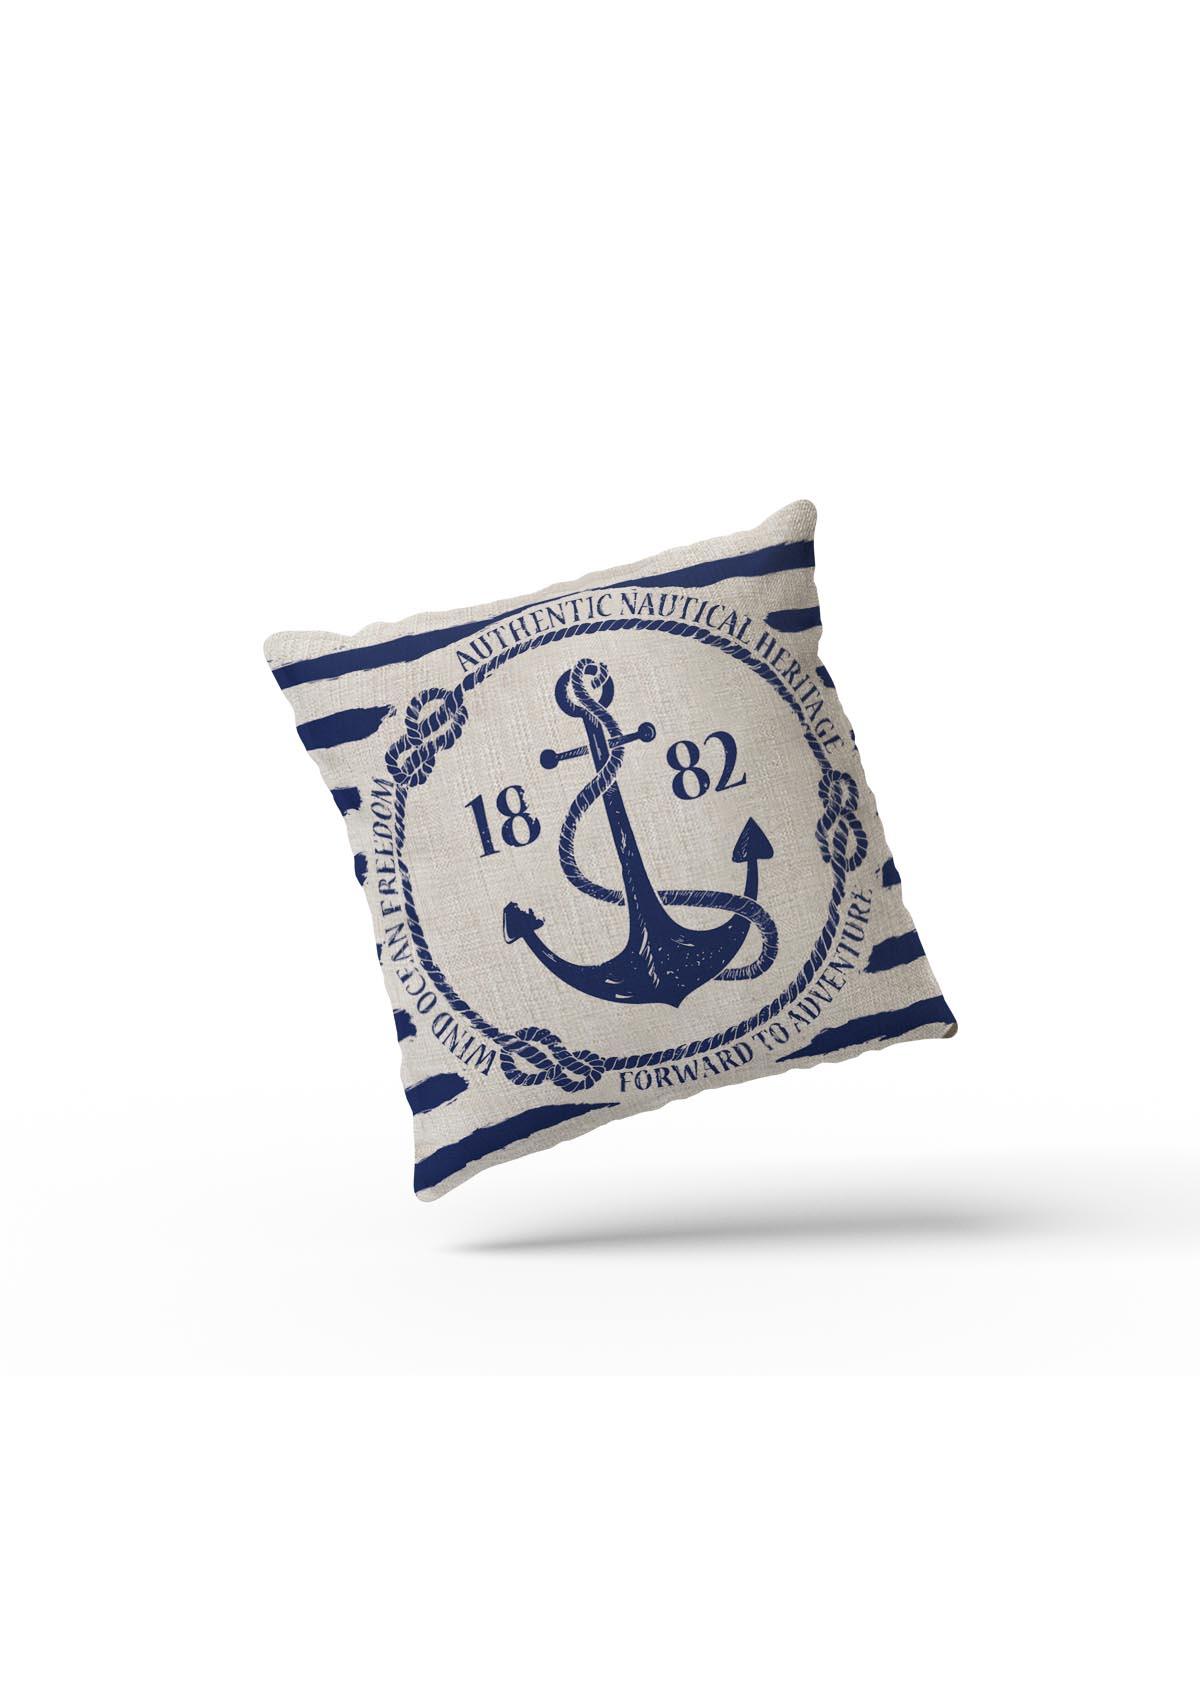 nautical cushion cover patterns